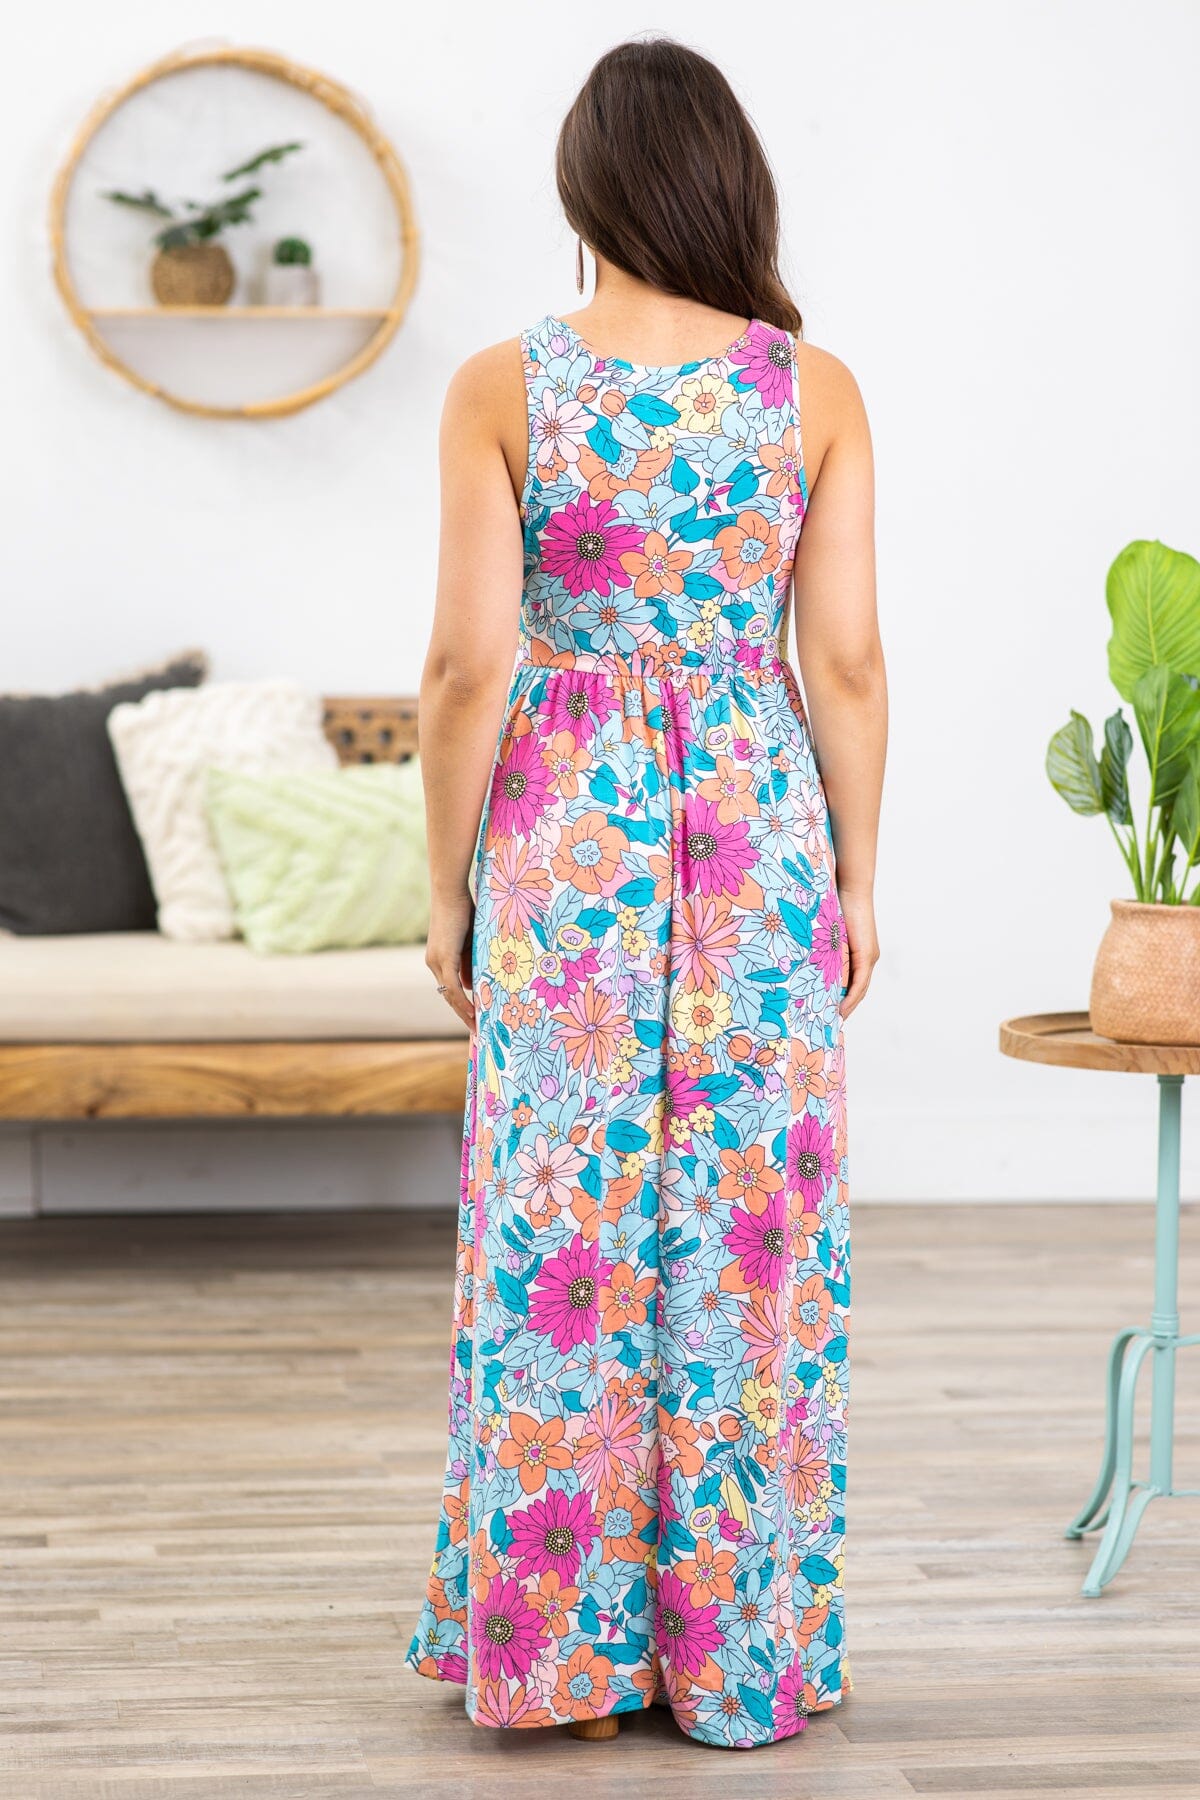 Aqua and Hot Pink Floral Print Maxi Dress - Filly Flair